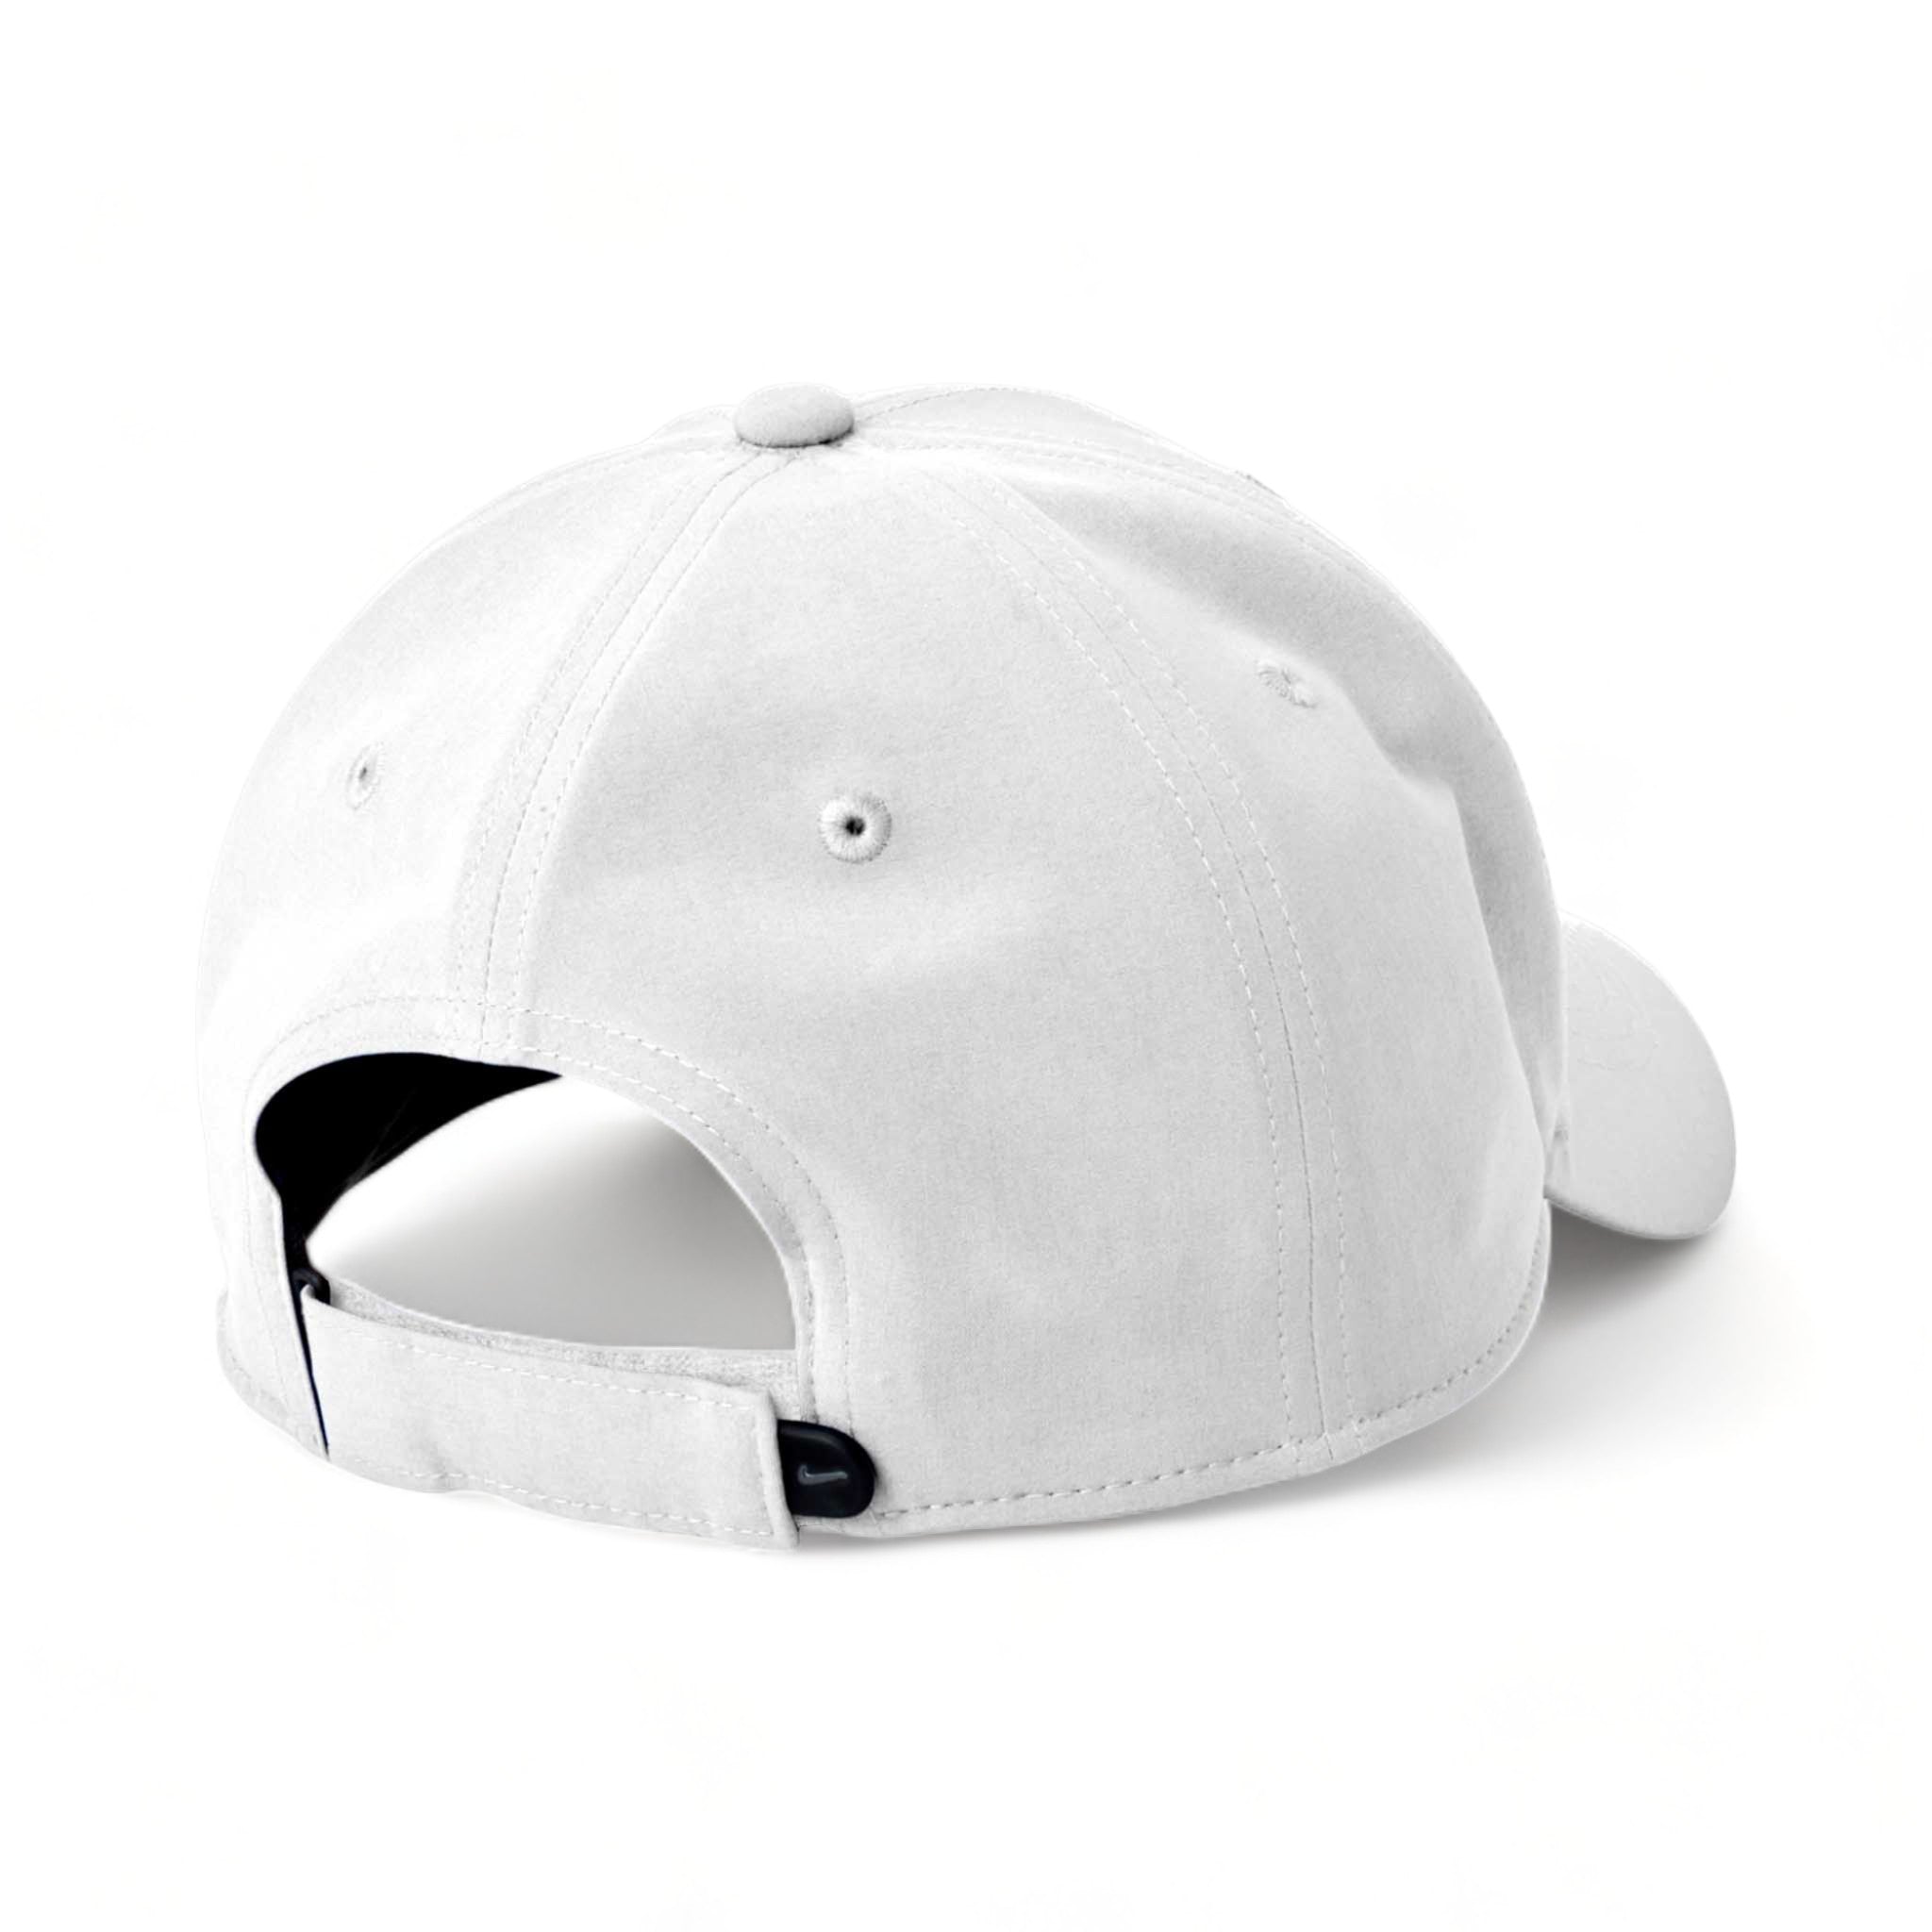 Back view of Nike NKFB6447 custom hat in white